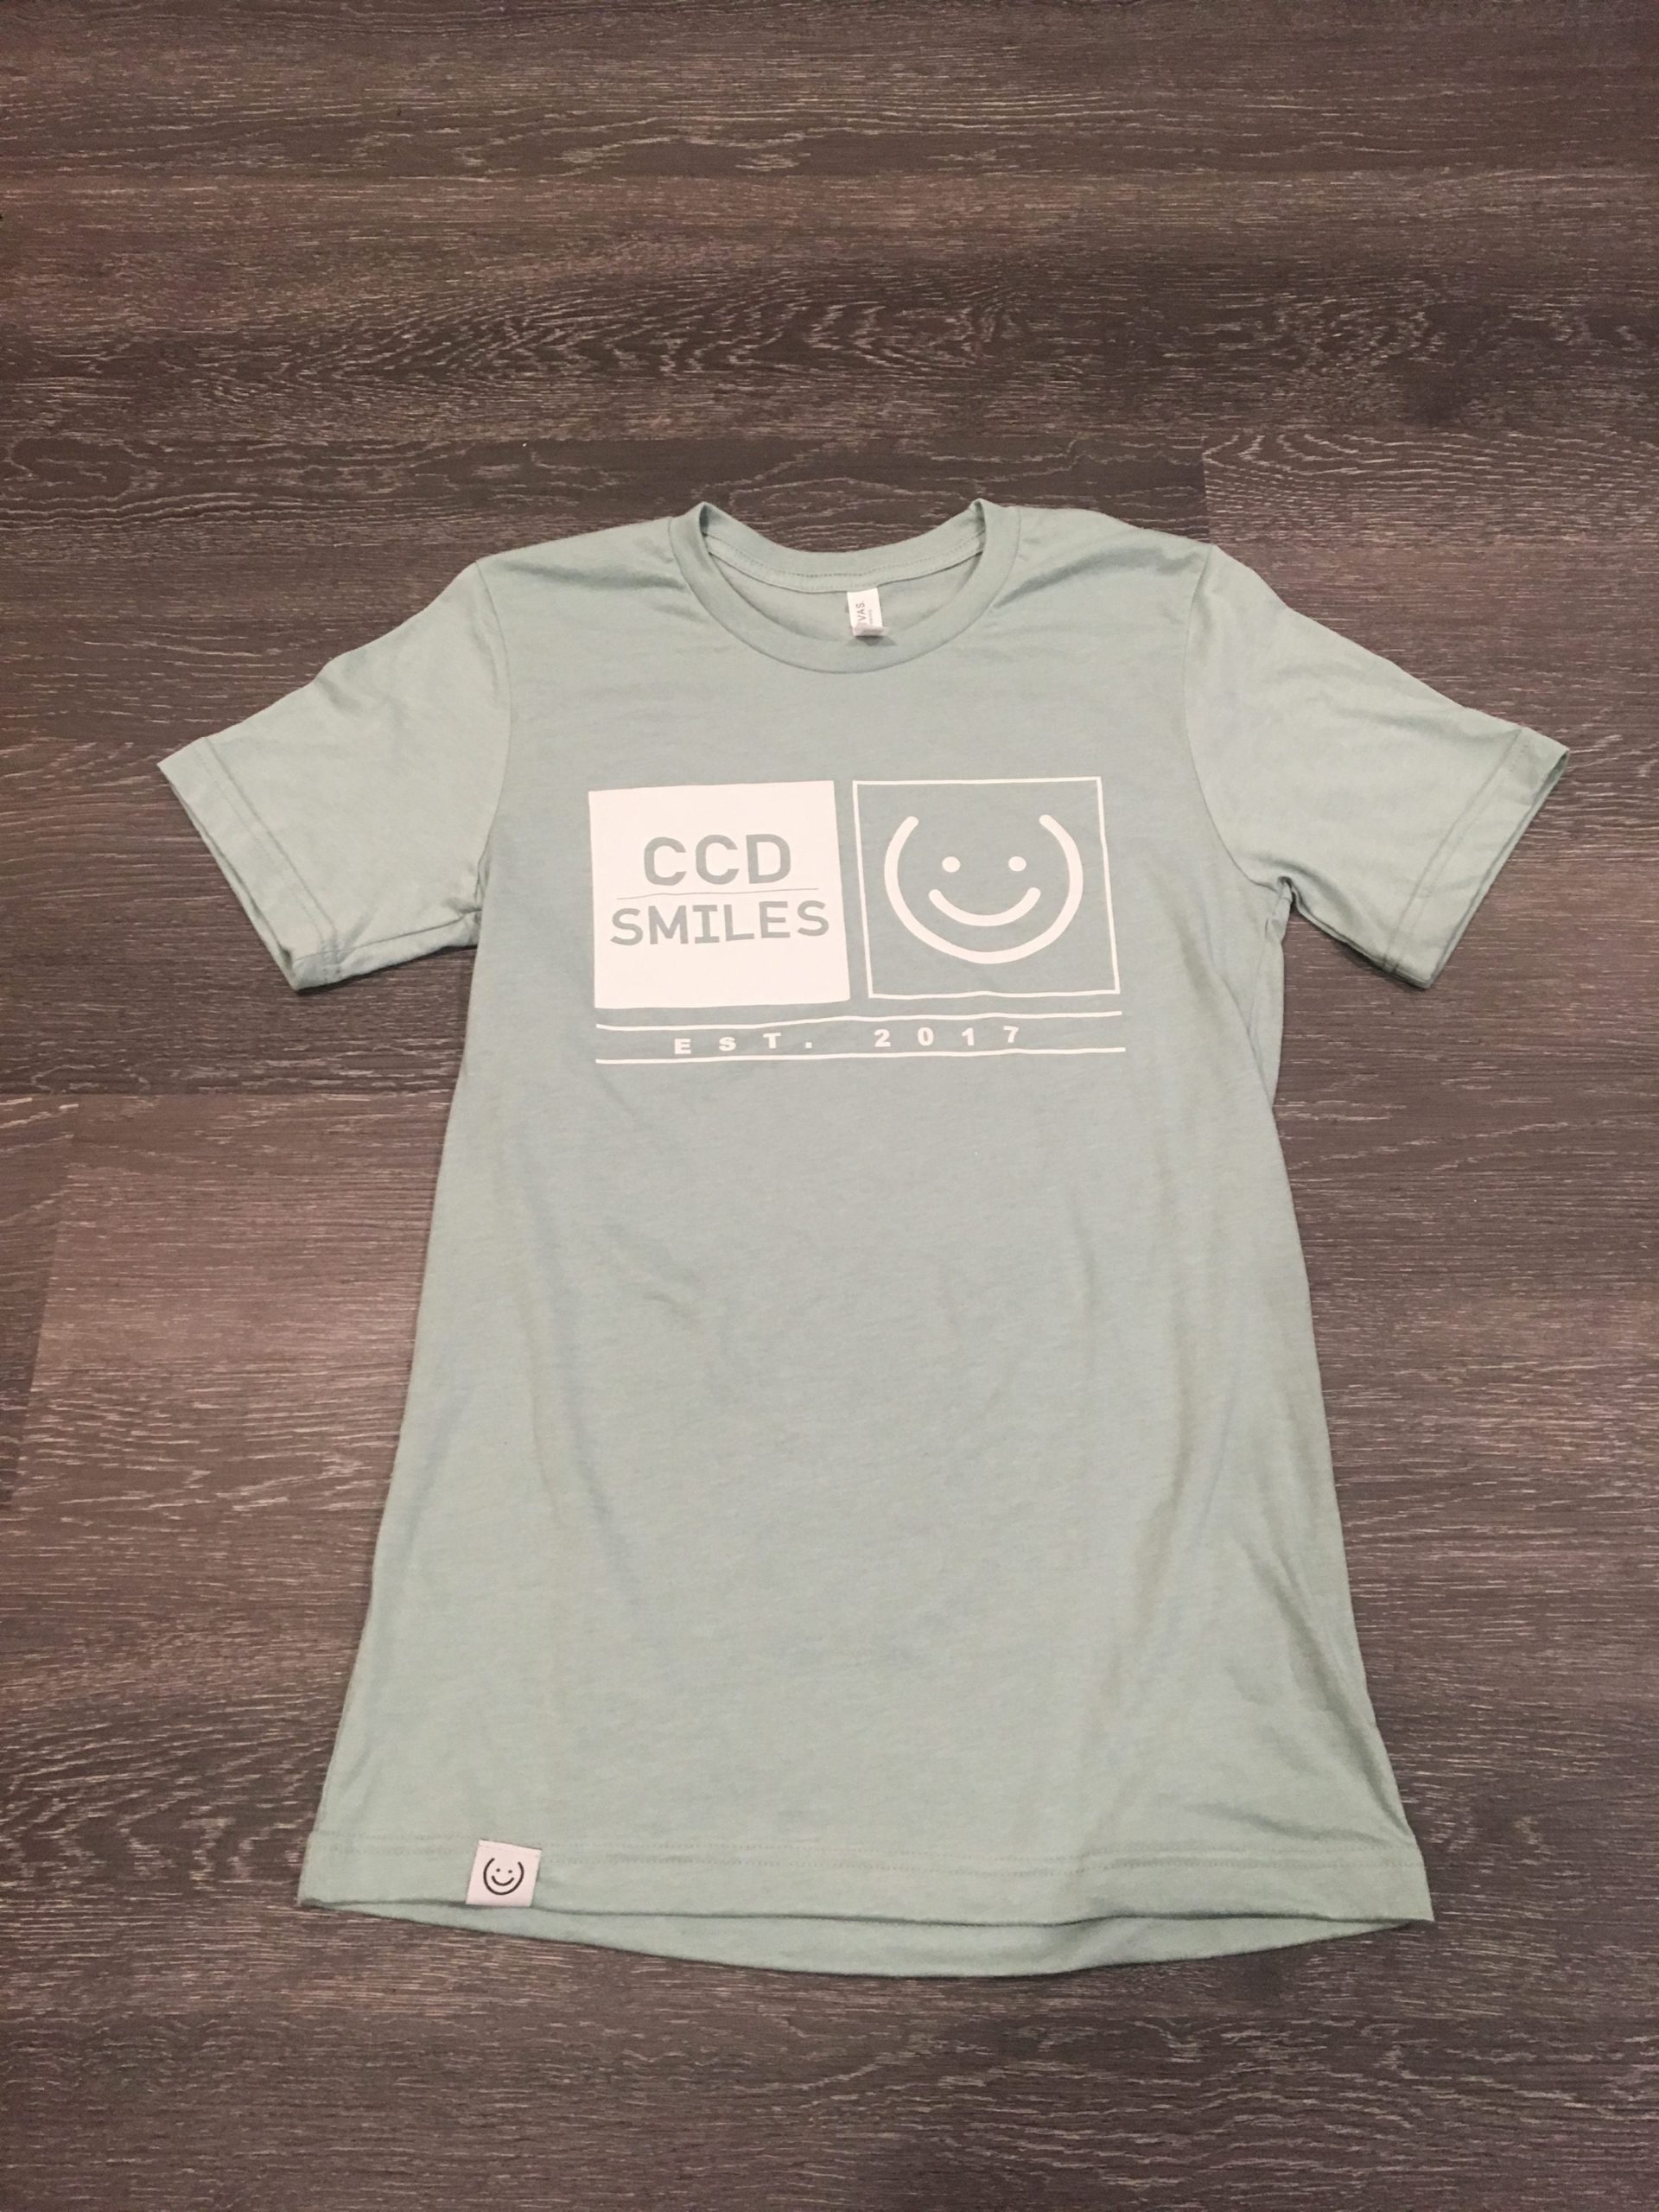 2017 T-Shirt | CCD Smiles